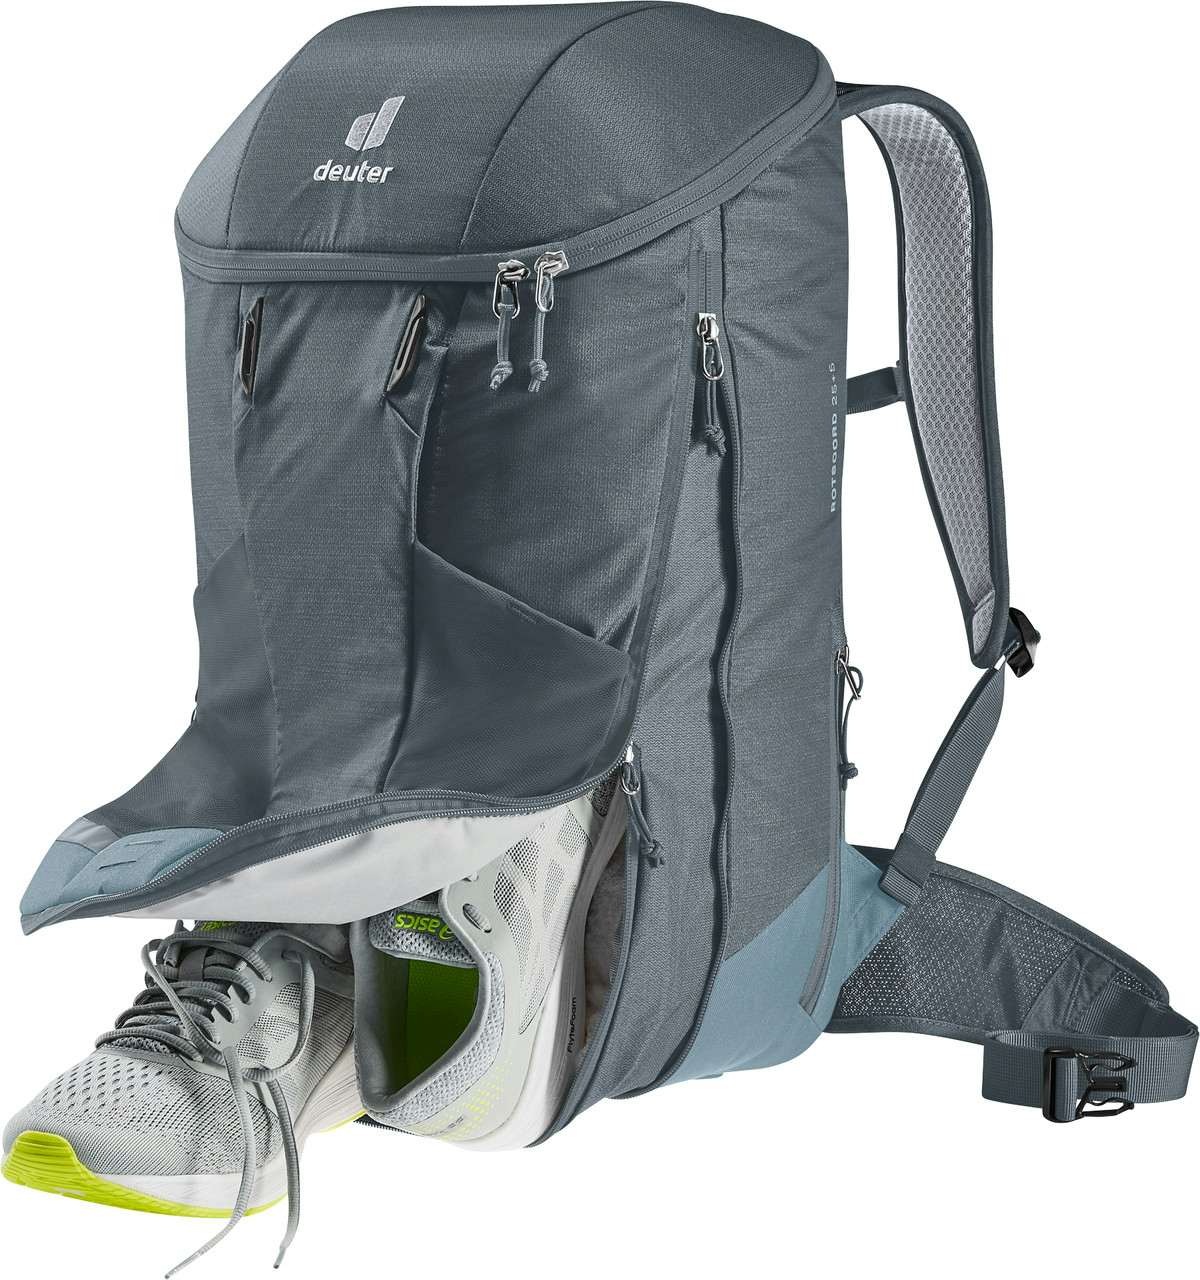 Rotsoord 25+5 Backpack Graphite-Shale